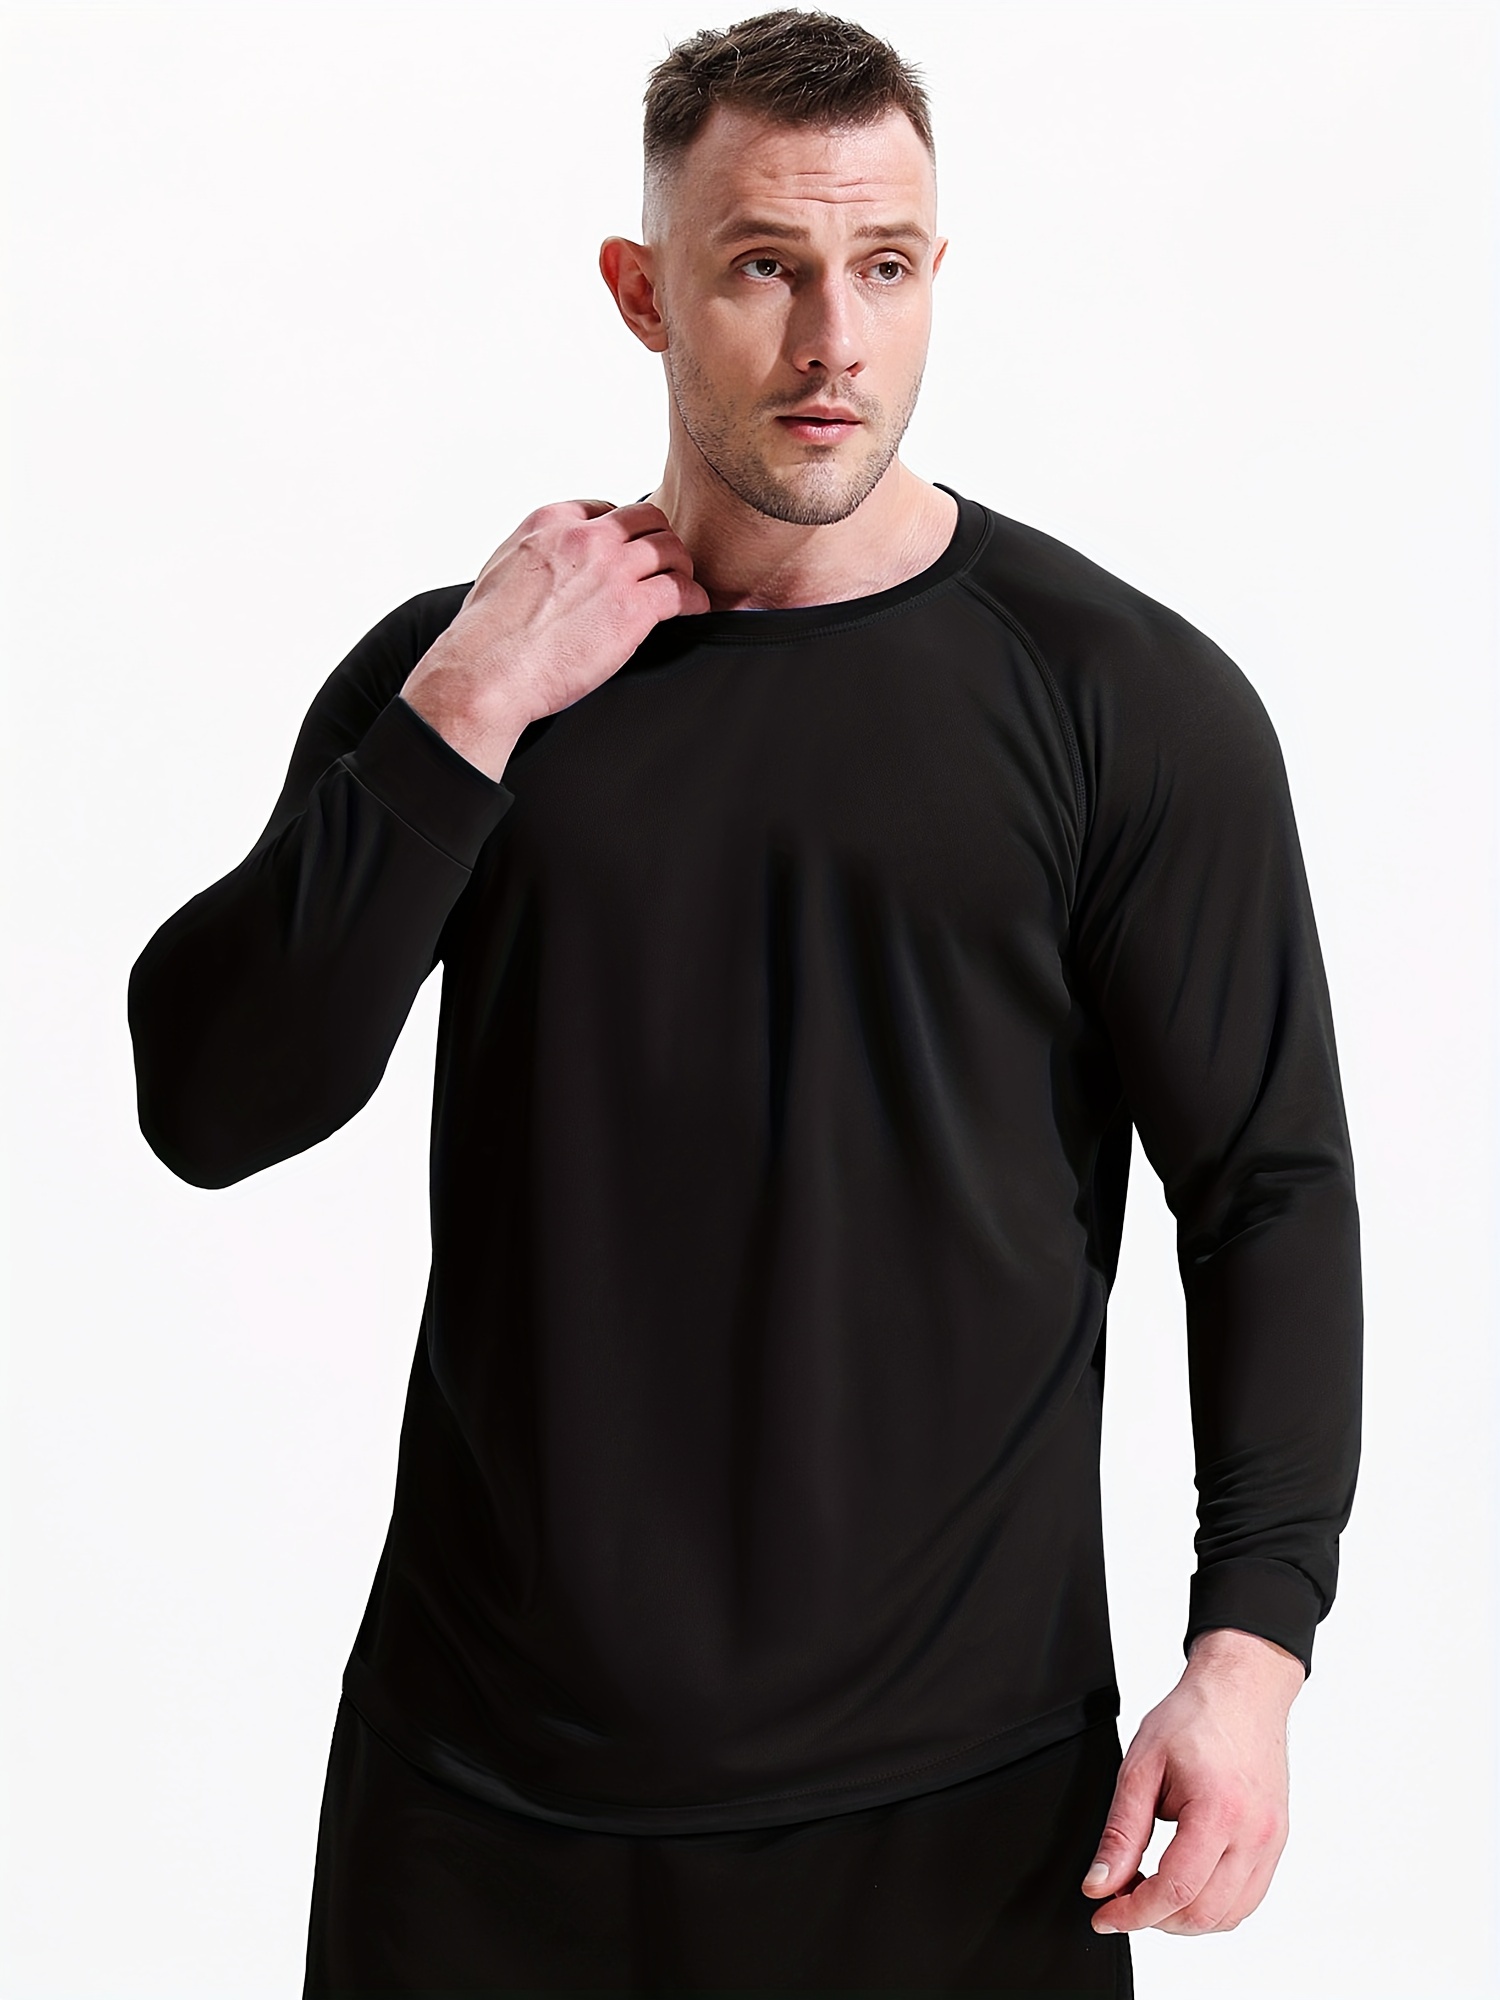 Long Sleeves Hooded Men's Sports T Shirt - Men's Fitness Apparel